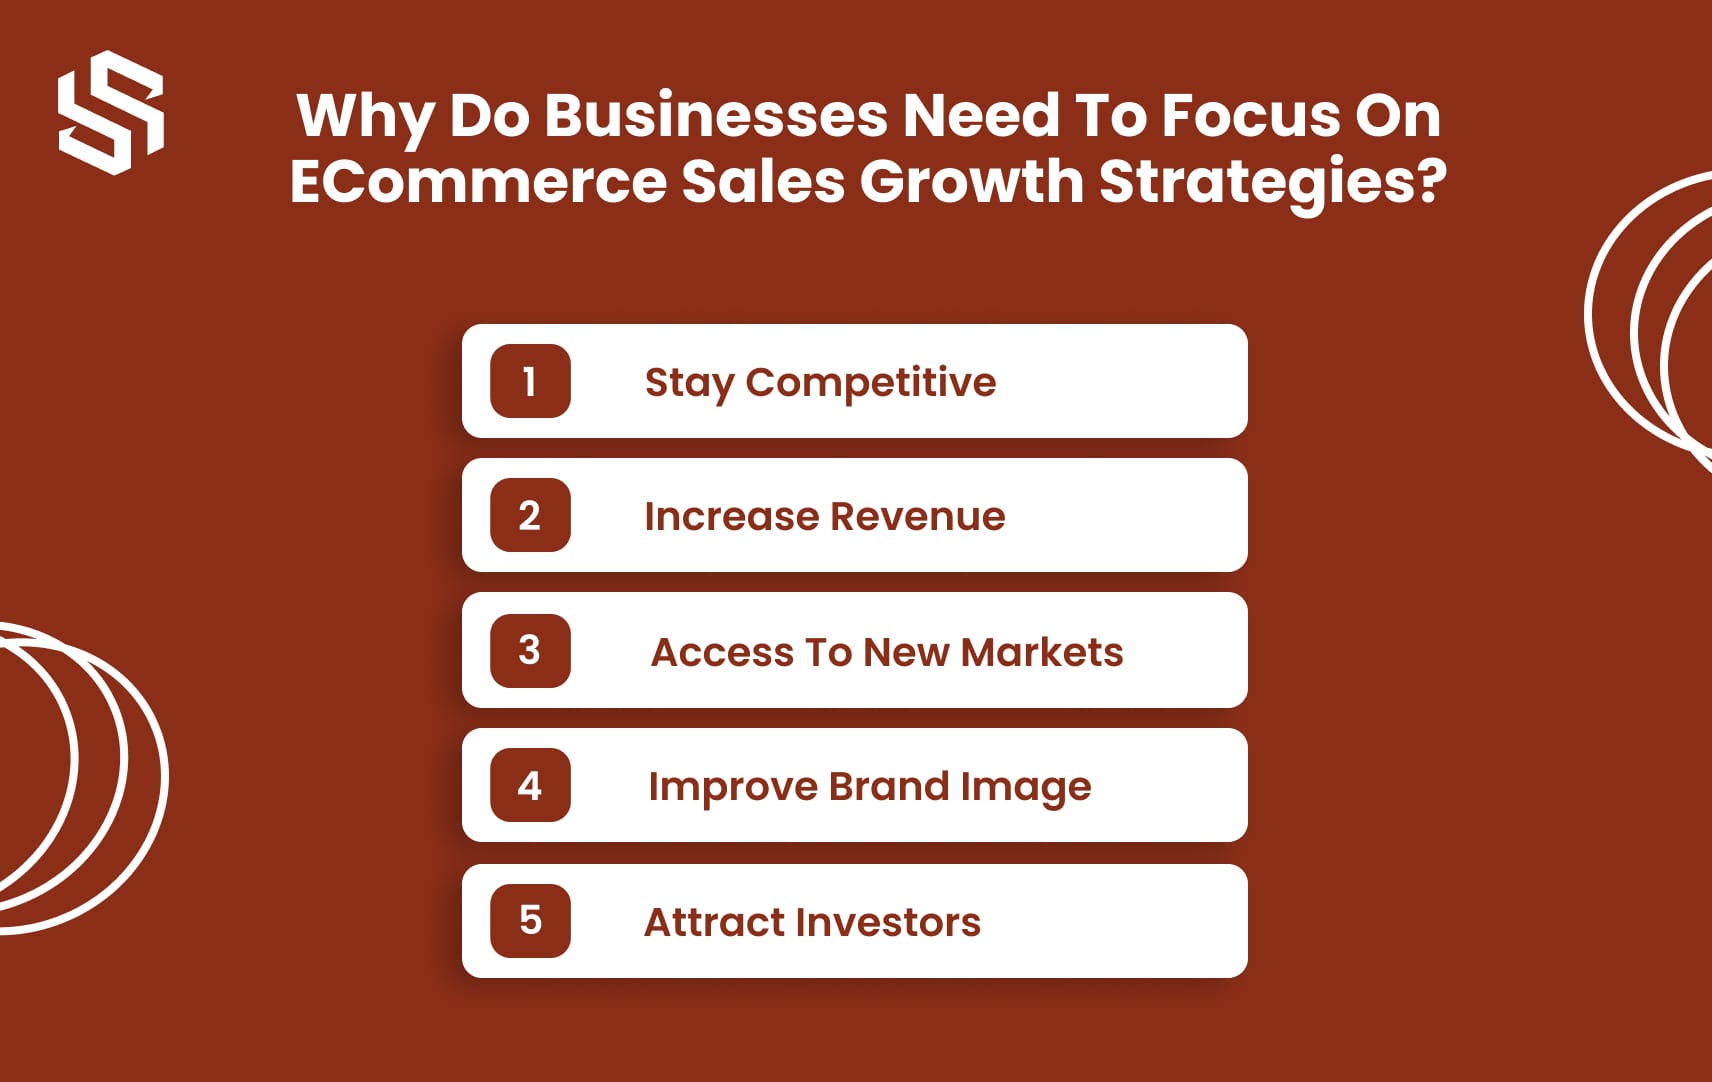 Focus On Ecommerce Sales Growth Strategies